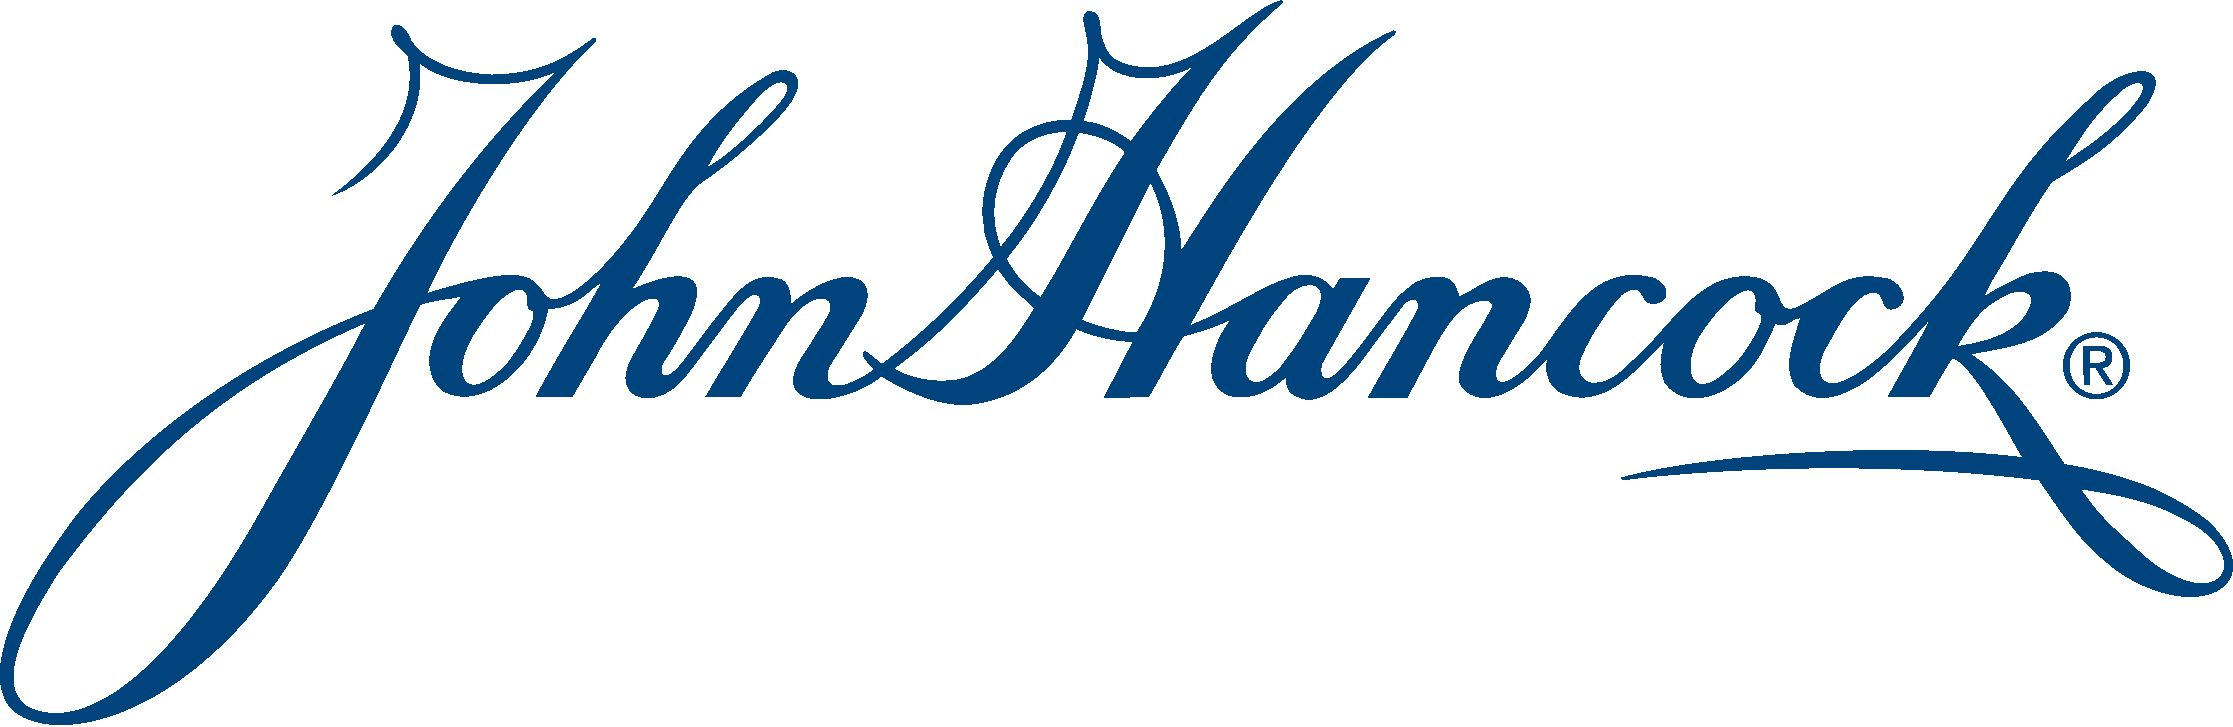 John Hancock Brand Logo